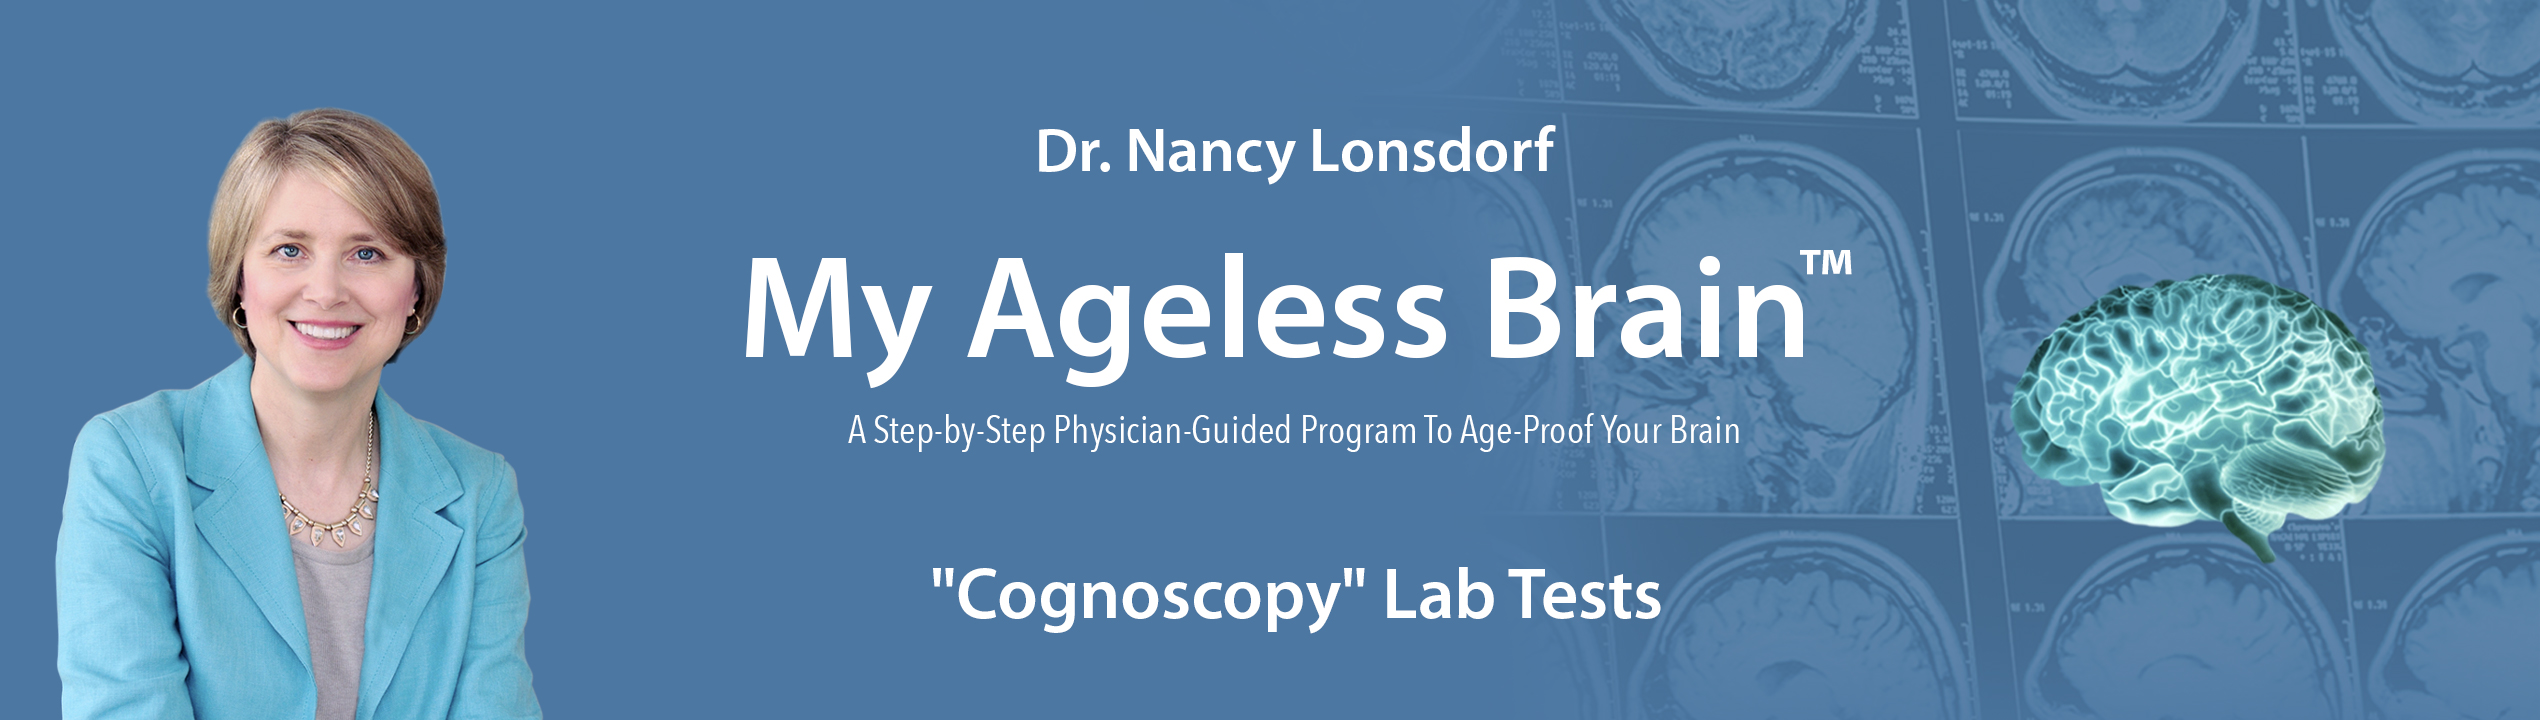 Cognoscopy Lab Tests